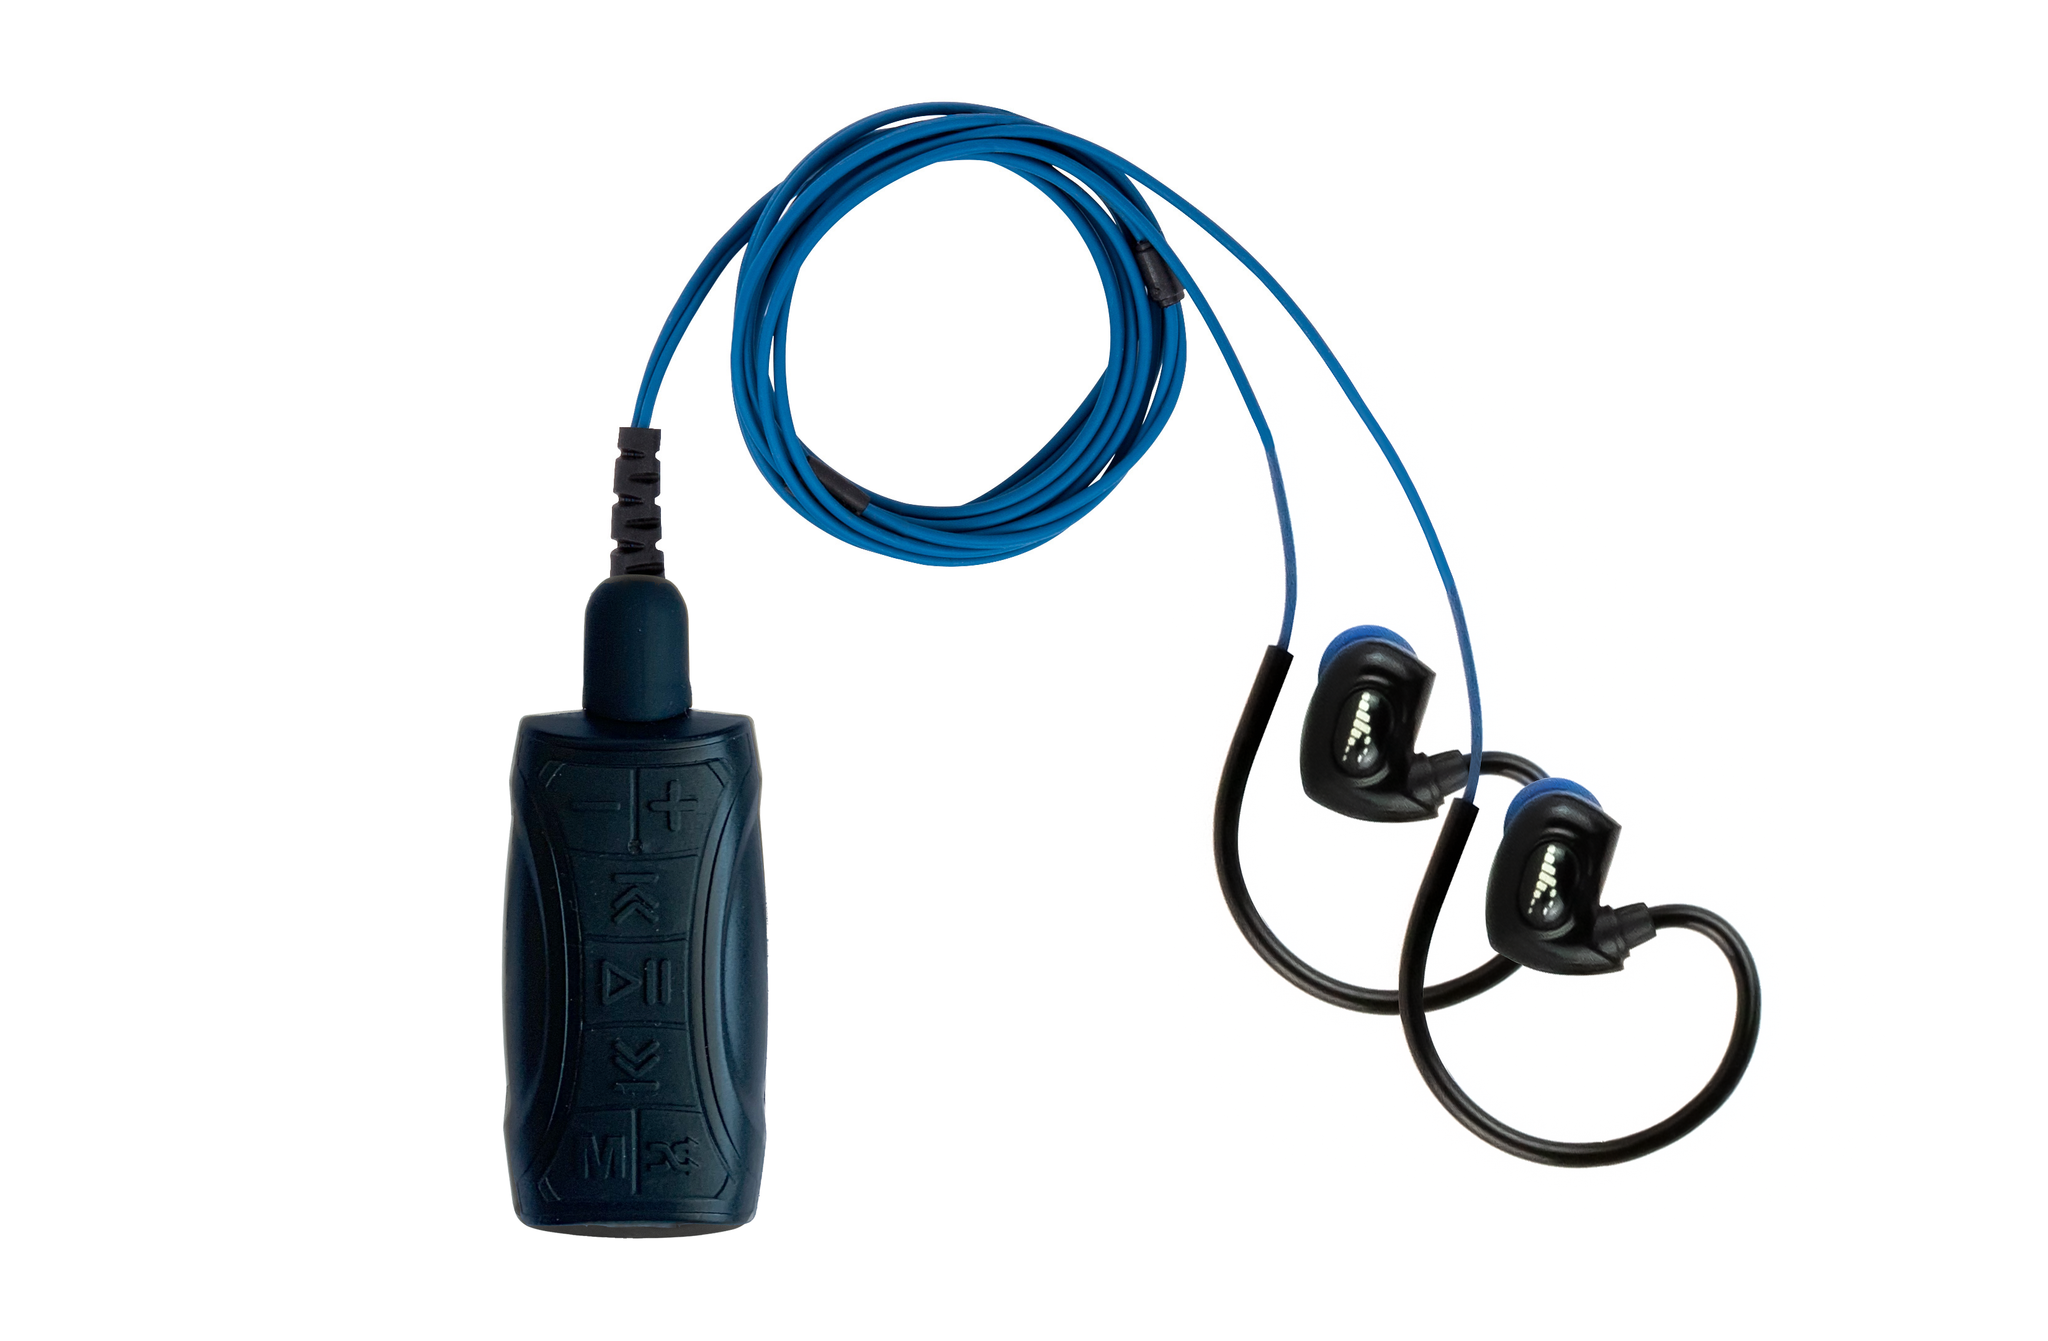 Waterproof Headphones for swimming h2o audio h20 audio swim headphones